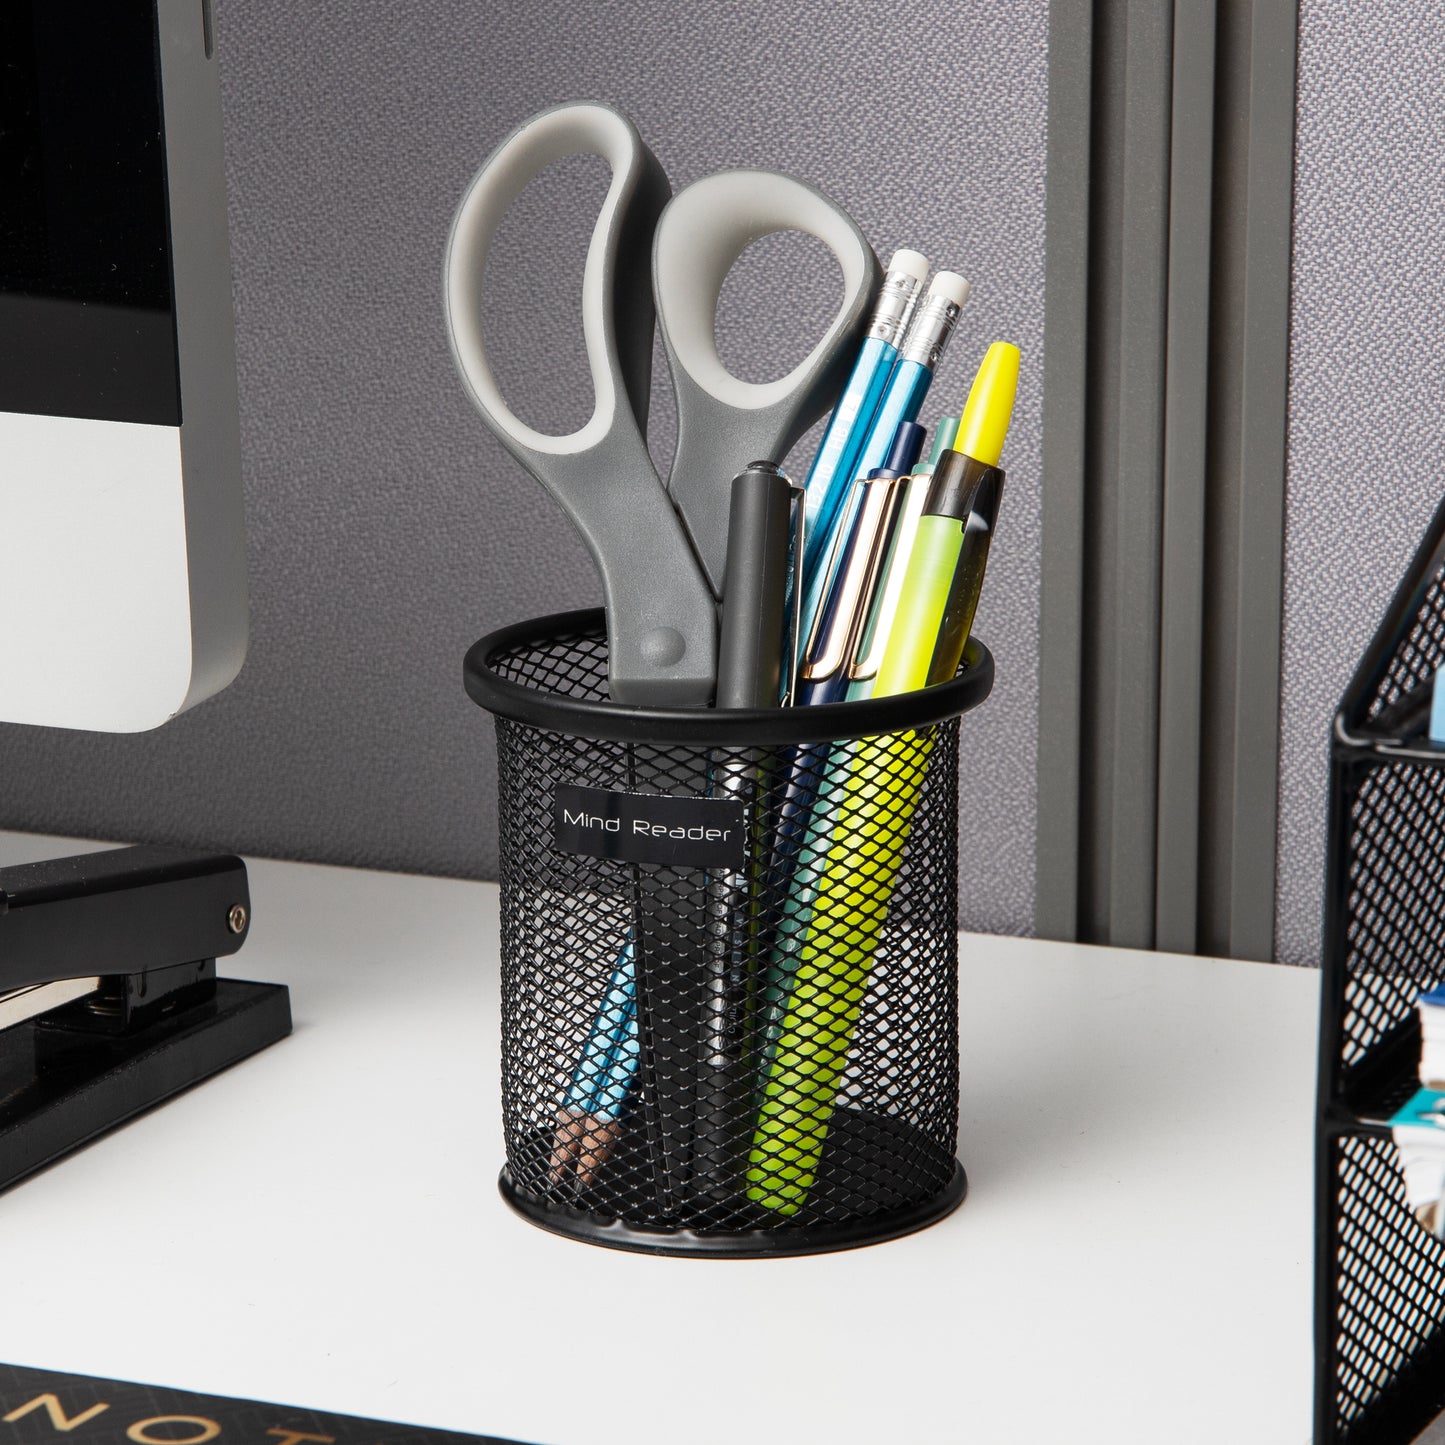 Mind Reader Pen and Accessories Holder, Desktop Organizer, Office, Metal Mesh, 3.5"L x 3.5"W x 3.75"H, Set of 3, Black